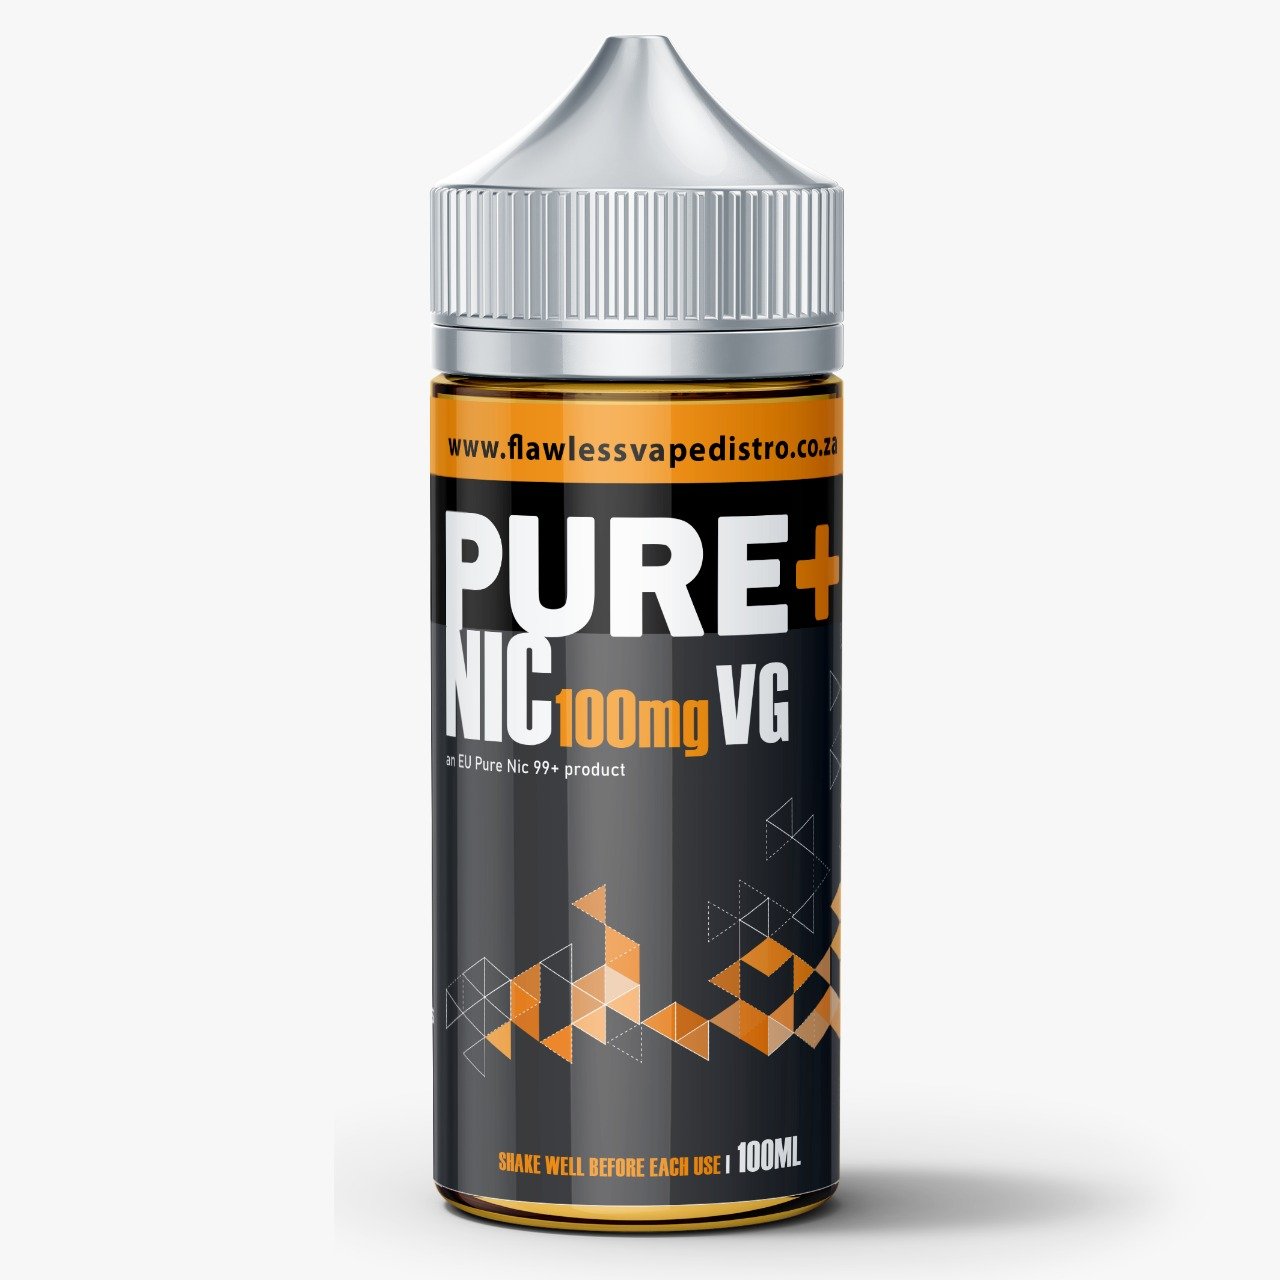 Pure+ 100mg Nicotine 100ml